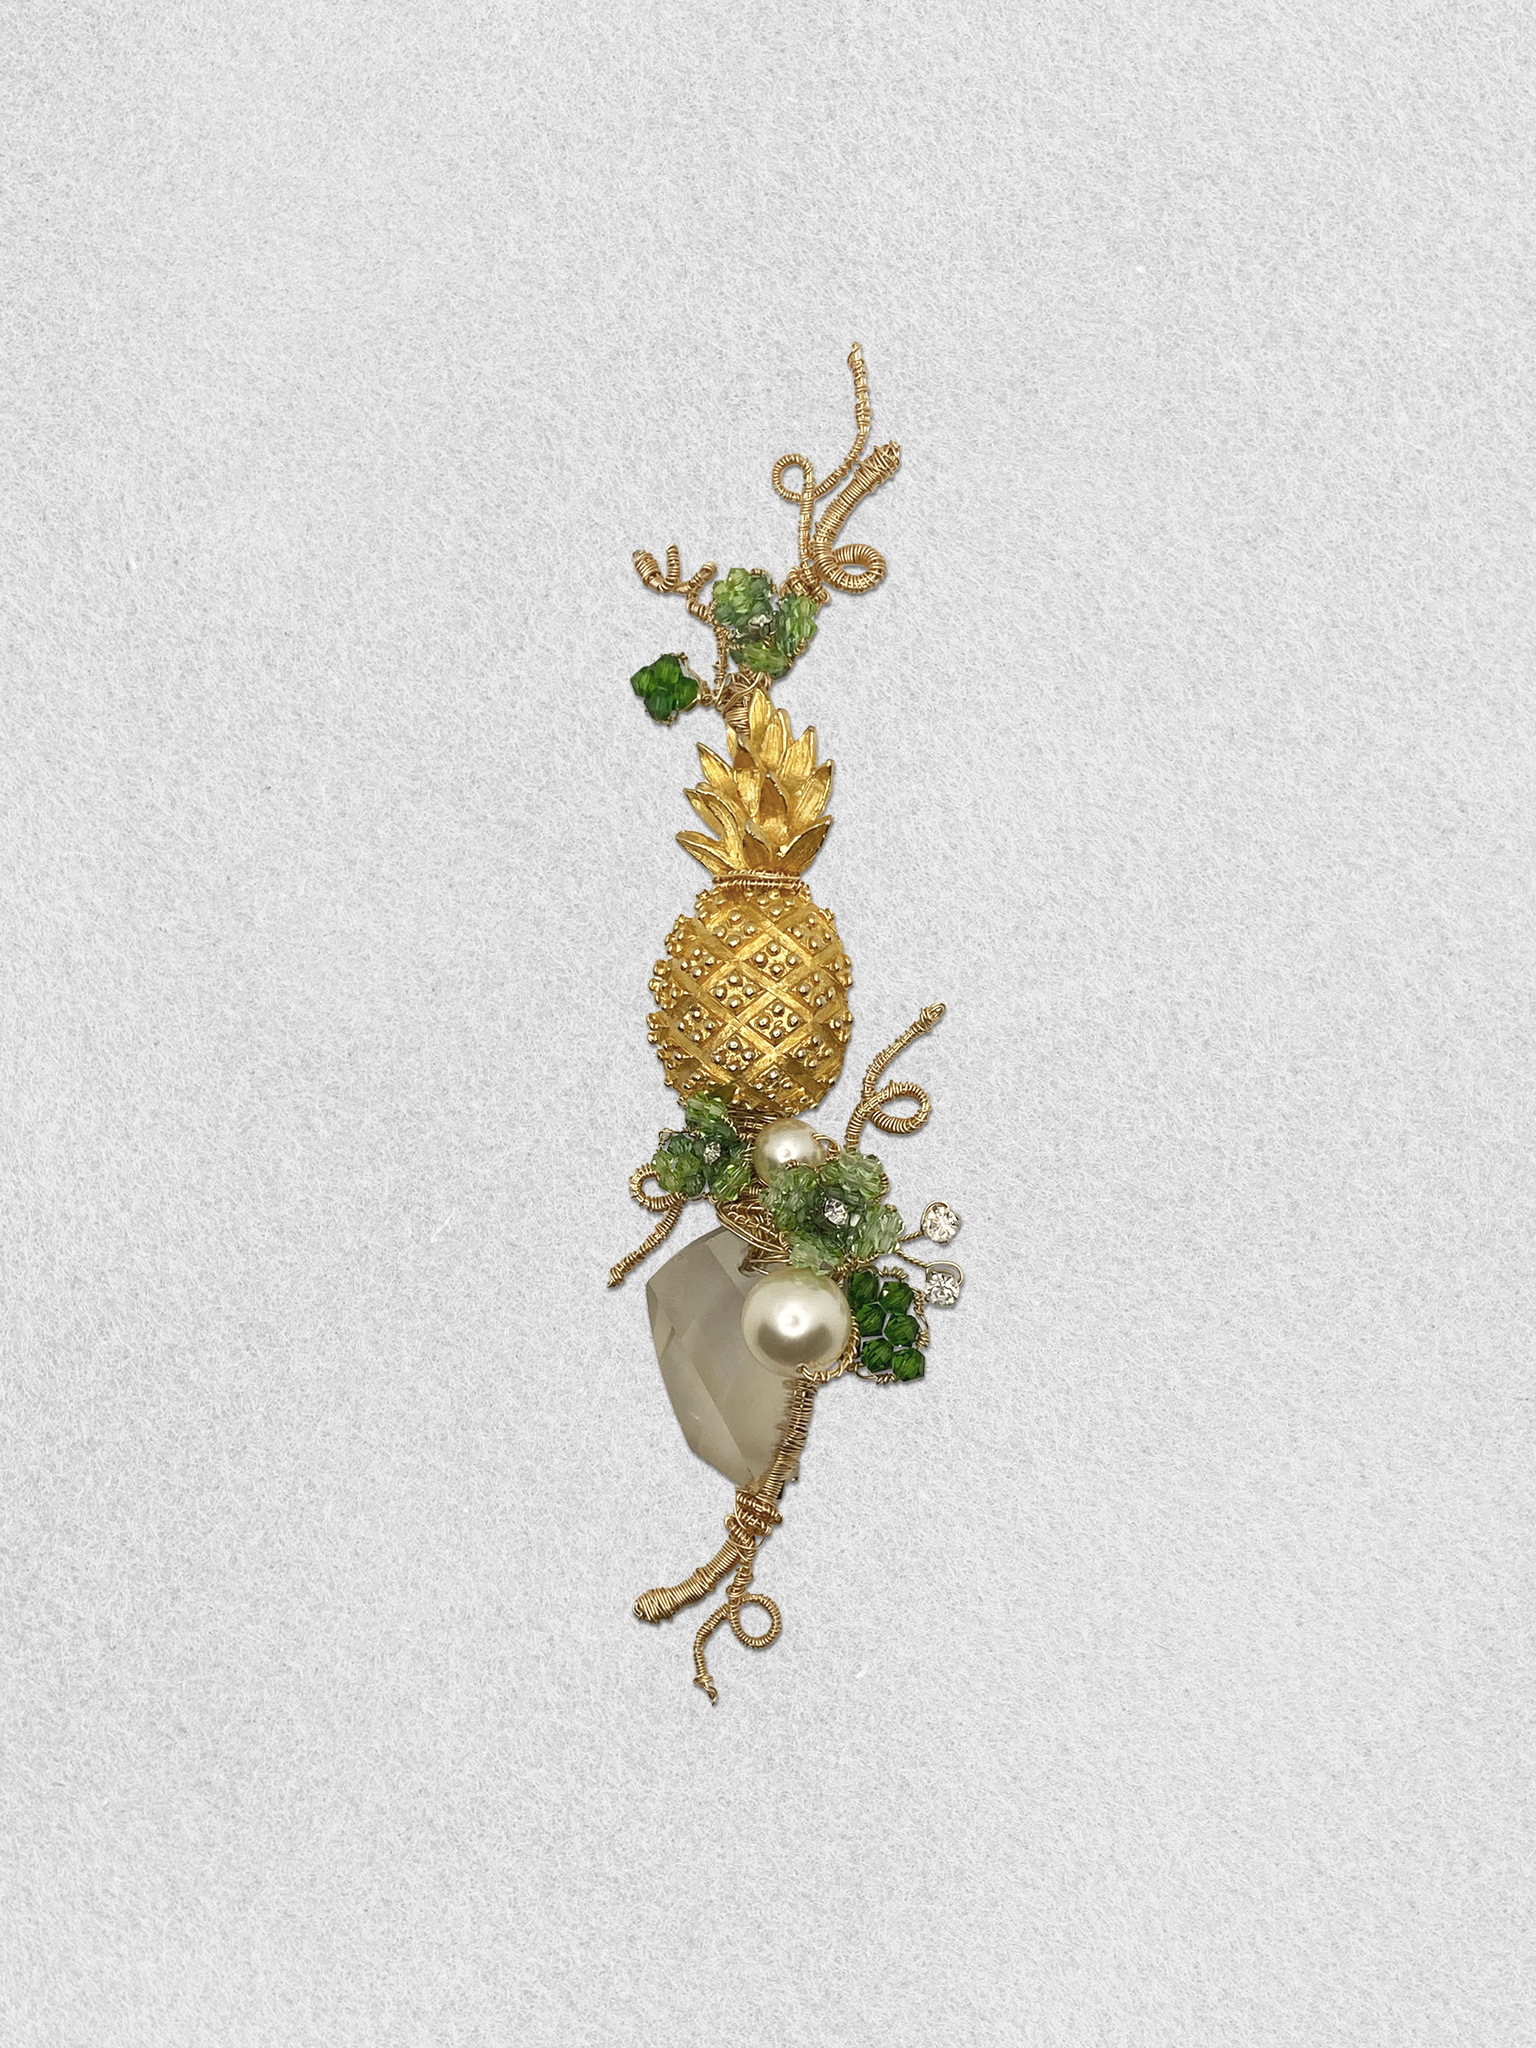 Men's Lapel Pin -The Golden Fruit